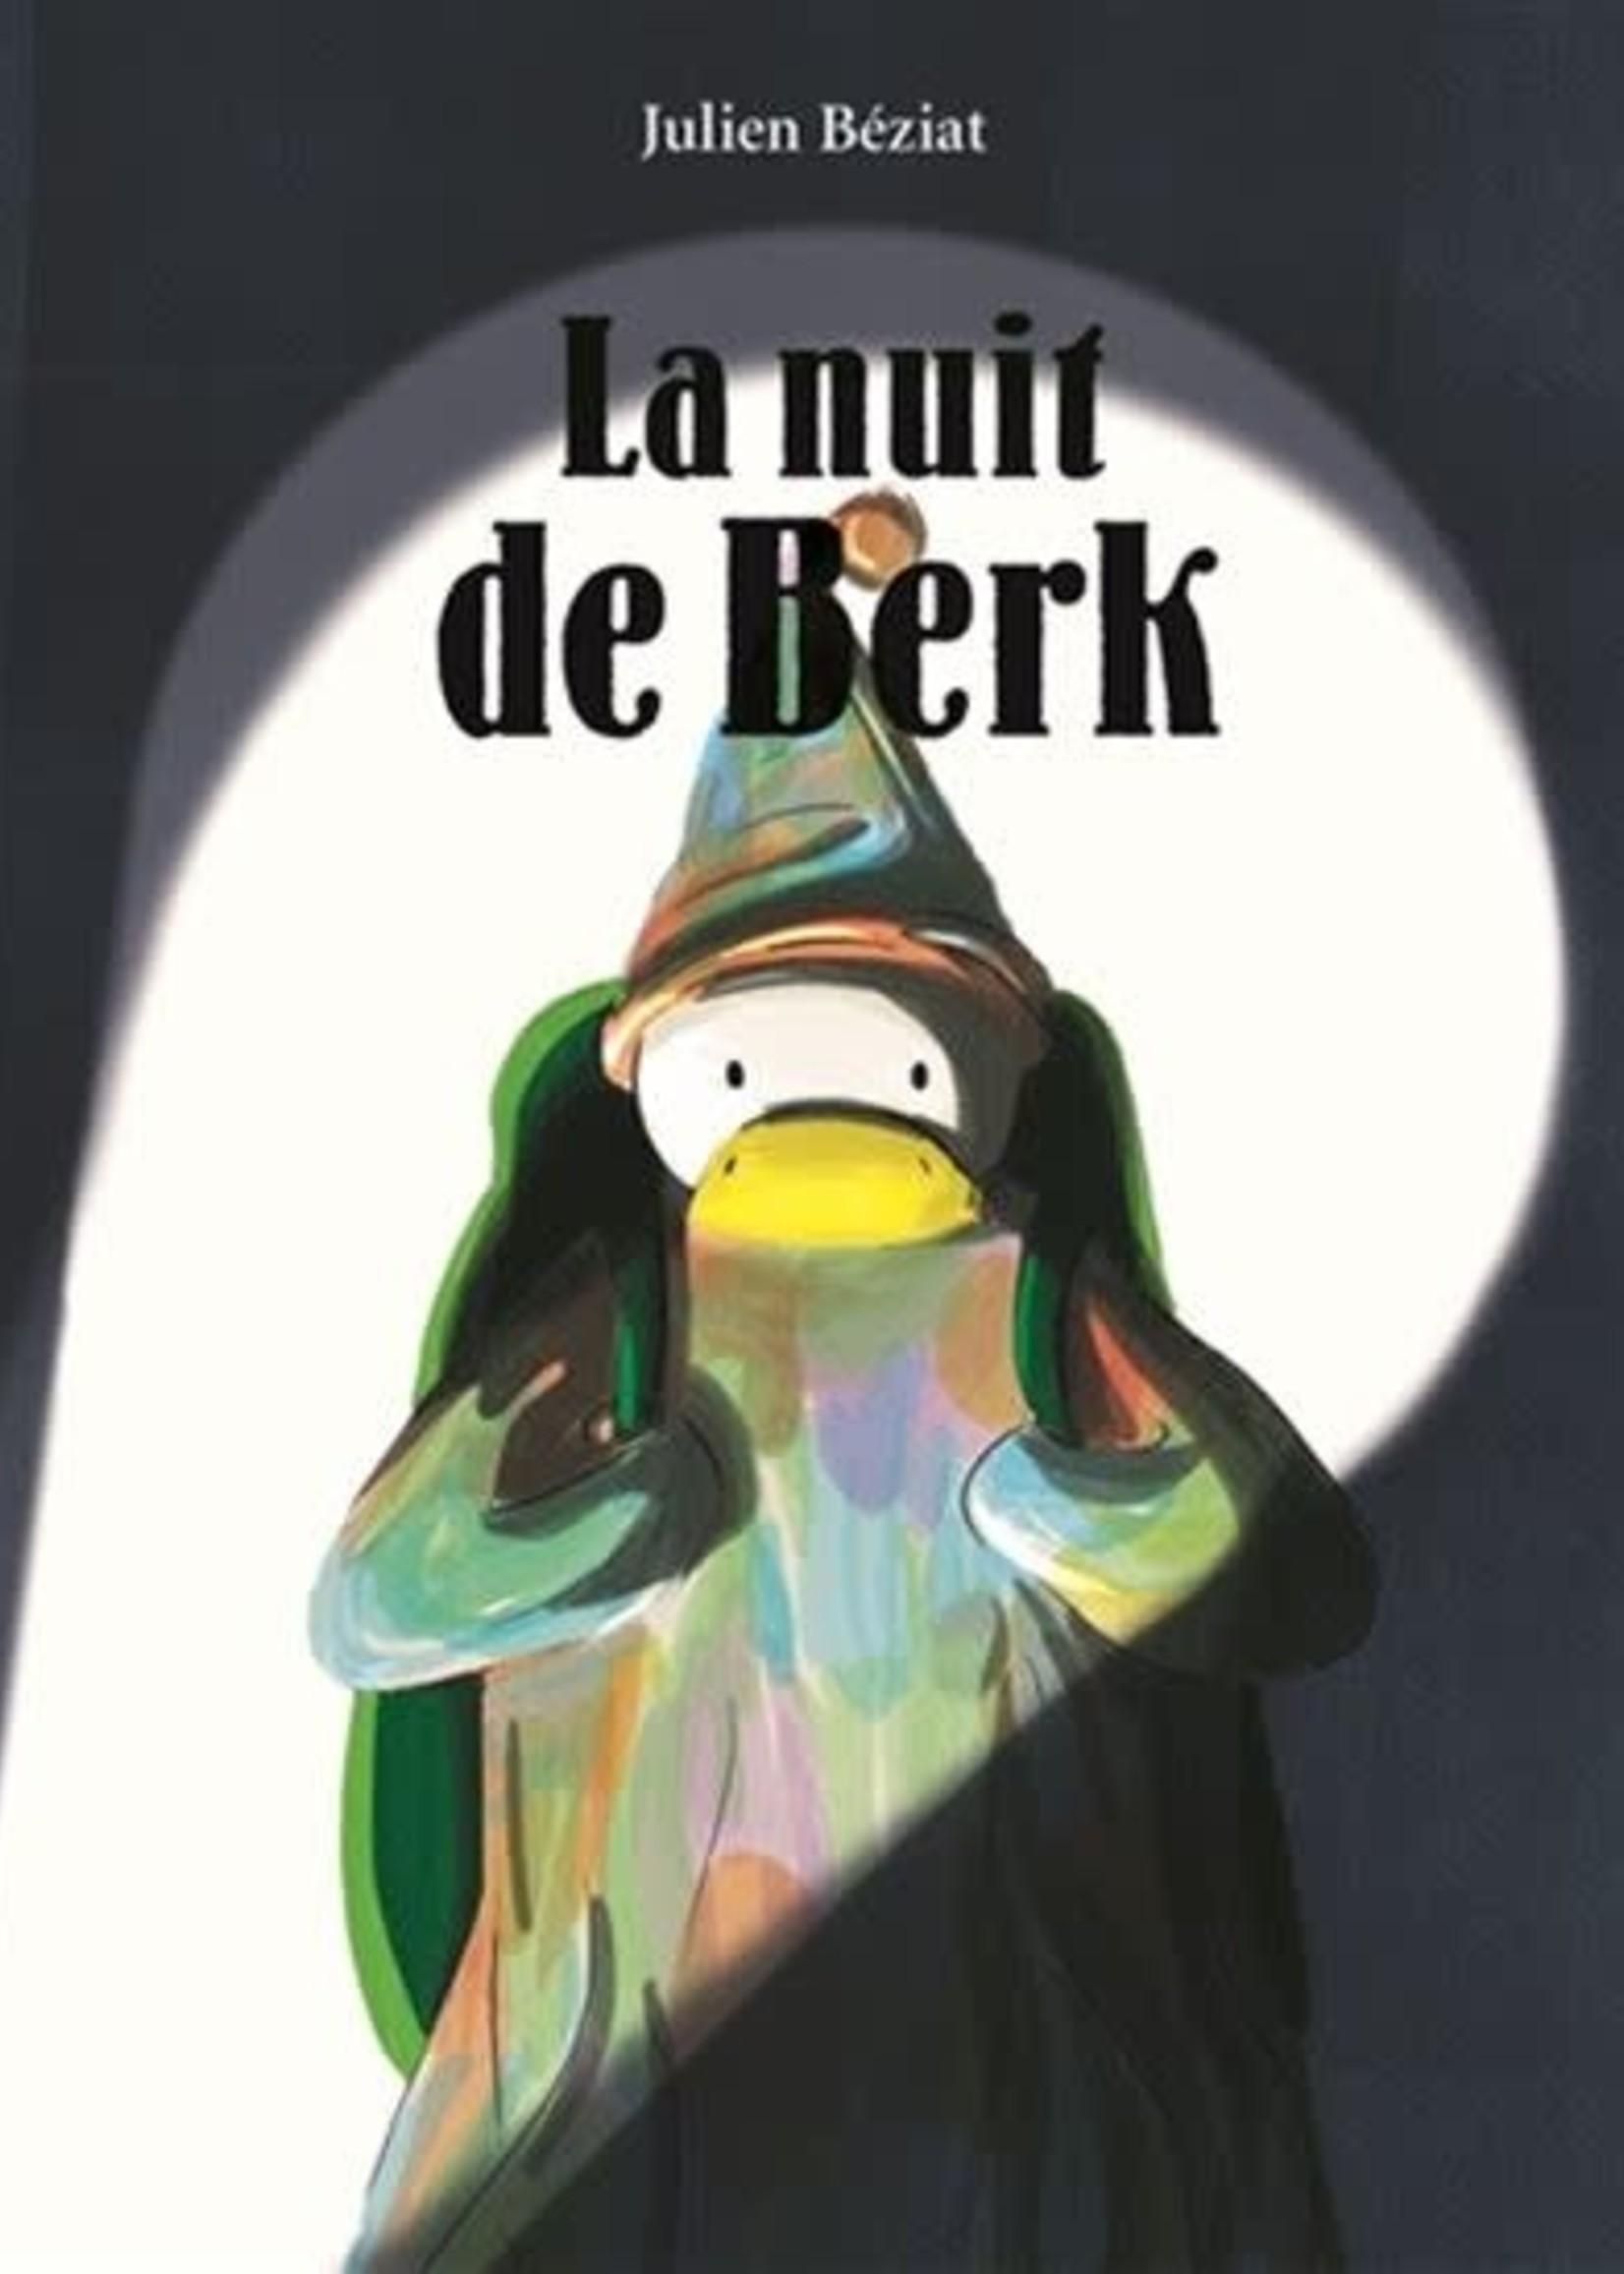 La nuit de Berk by Julien Béziat